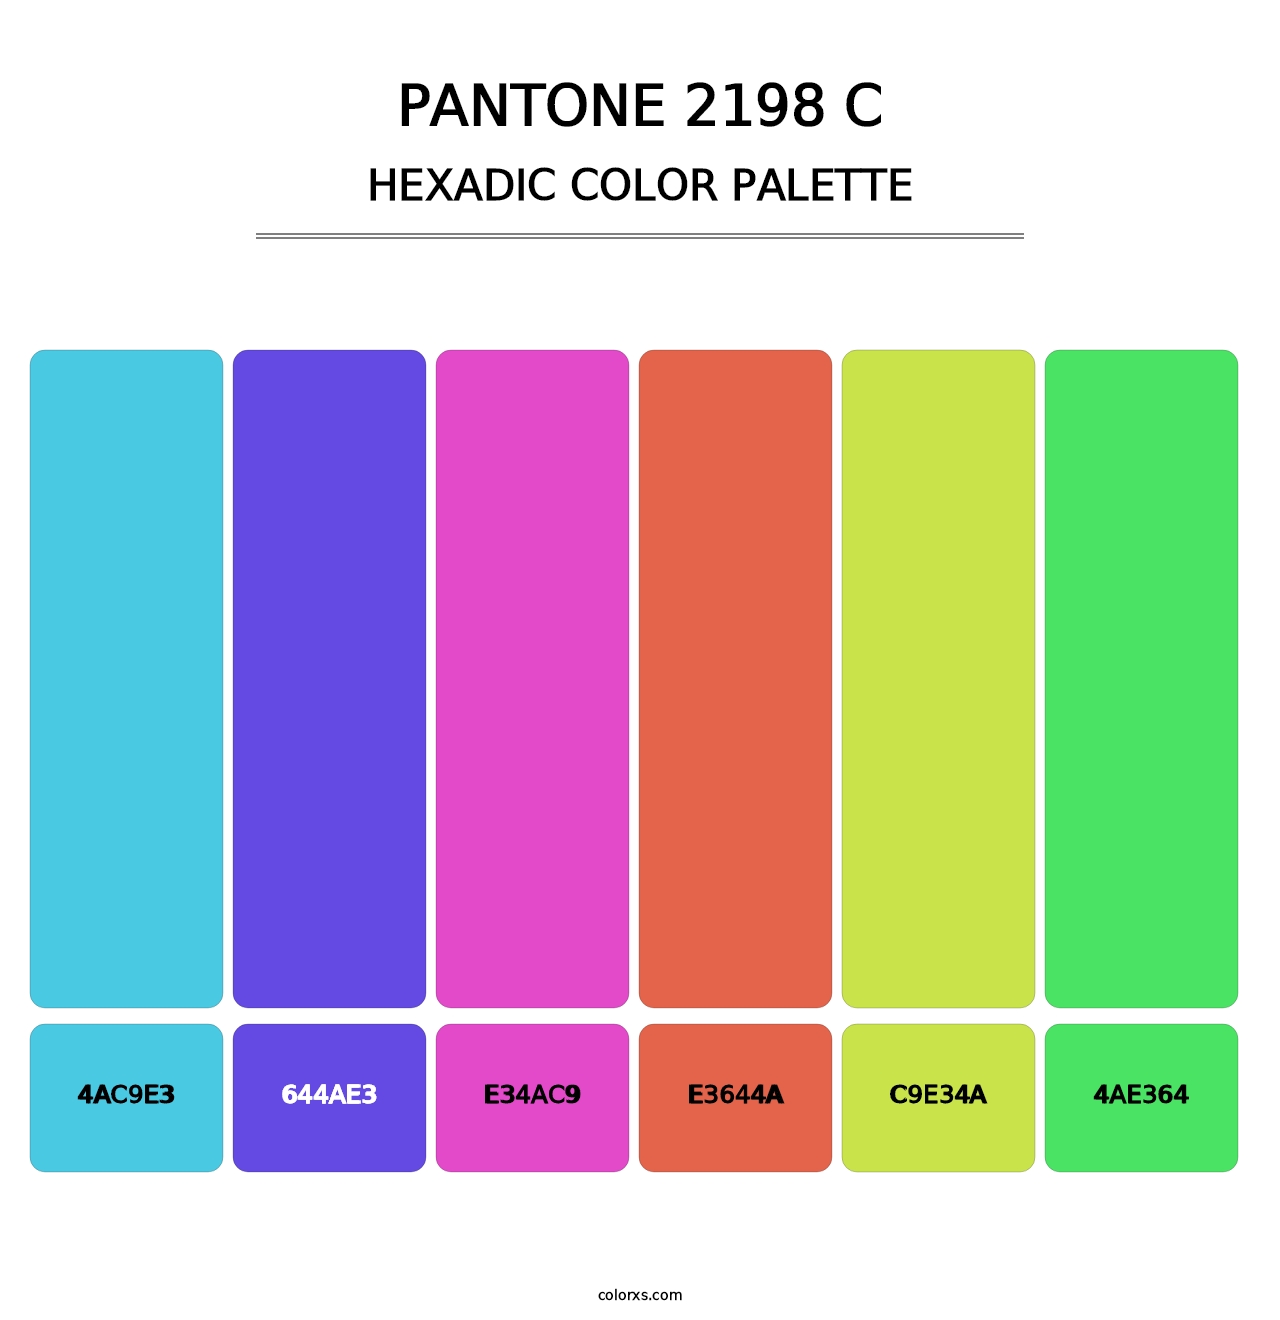 PANTONE 2198 C - Hexadic Color Palette